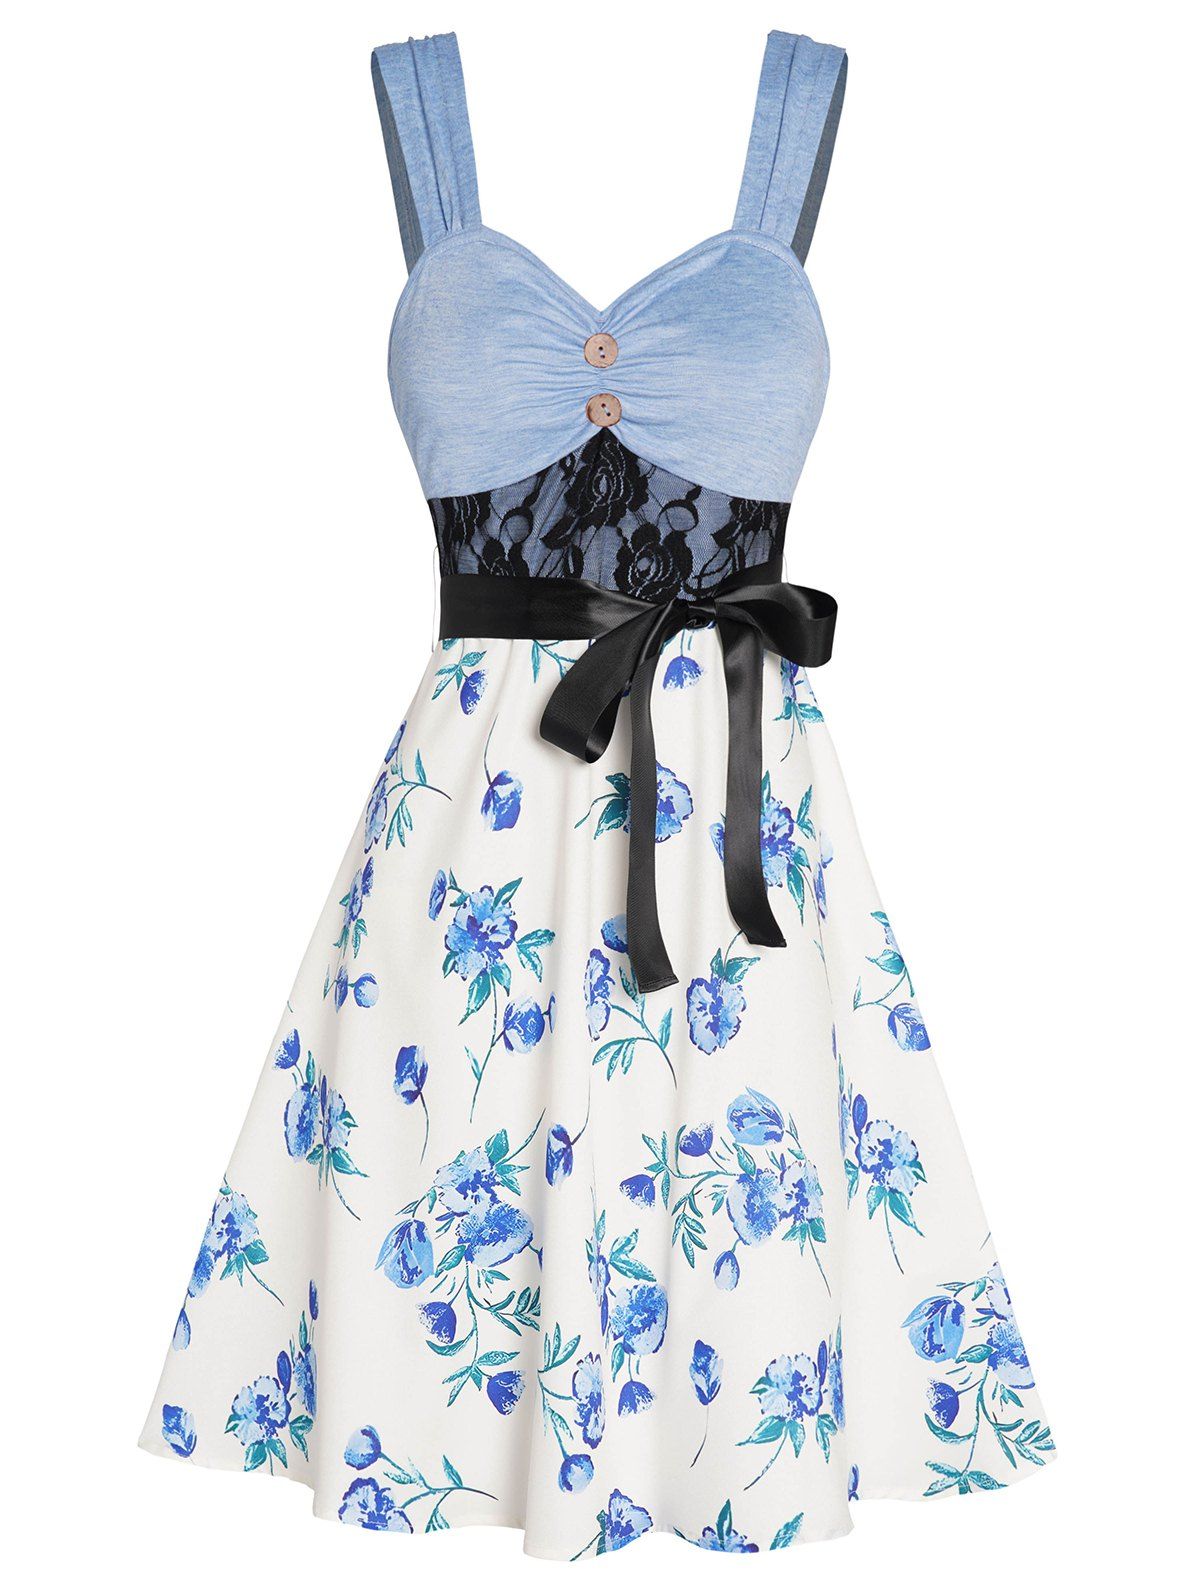 Colorblock Flower Print Dress Lace Panel Empire Waist Belted Mock Button A Line Mini Dress - LIGHT BLUE L